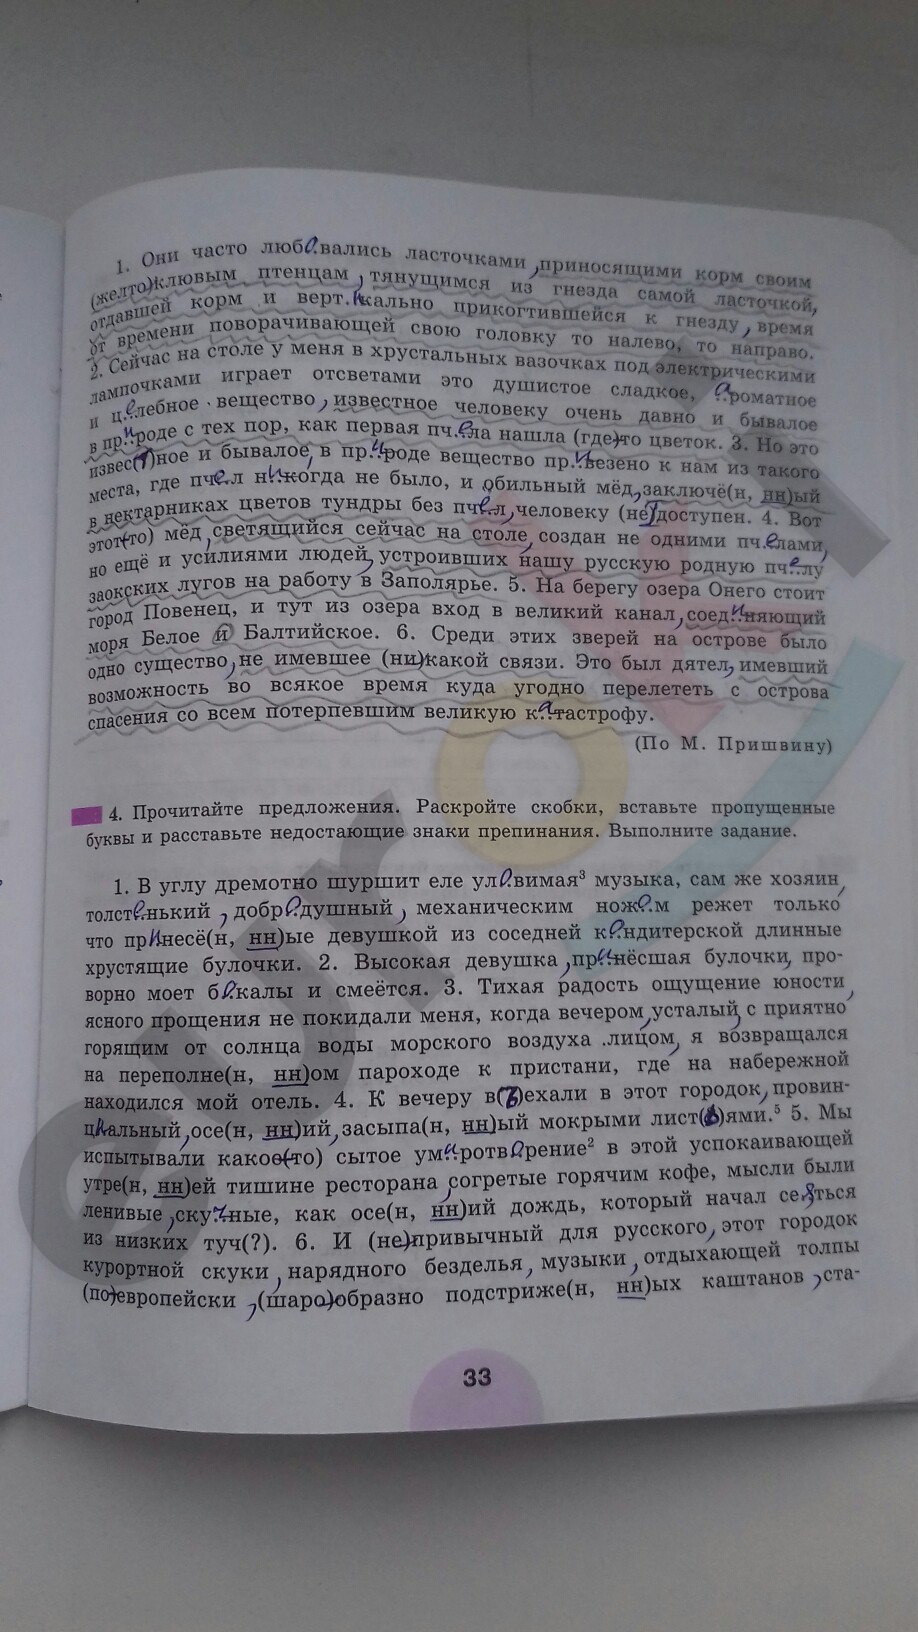 гдз 8 класс рабочая тетрадь часть 2 страница 33 русский язык Рыбченкова, Александрова